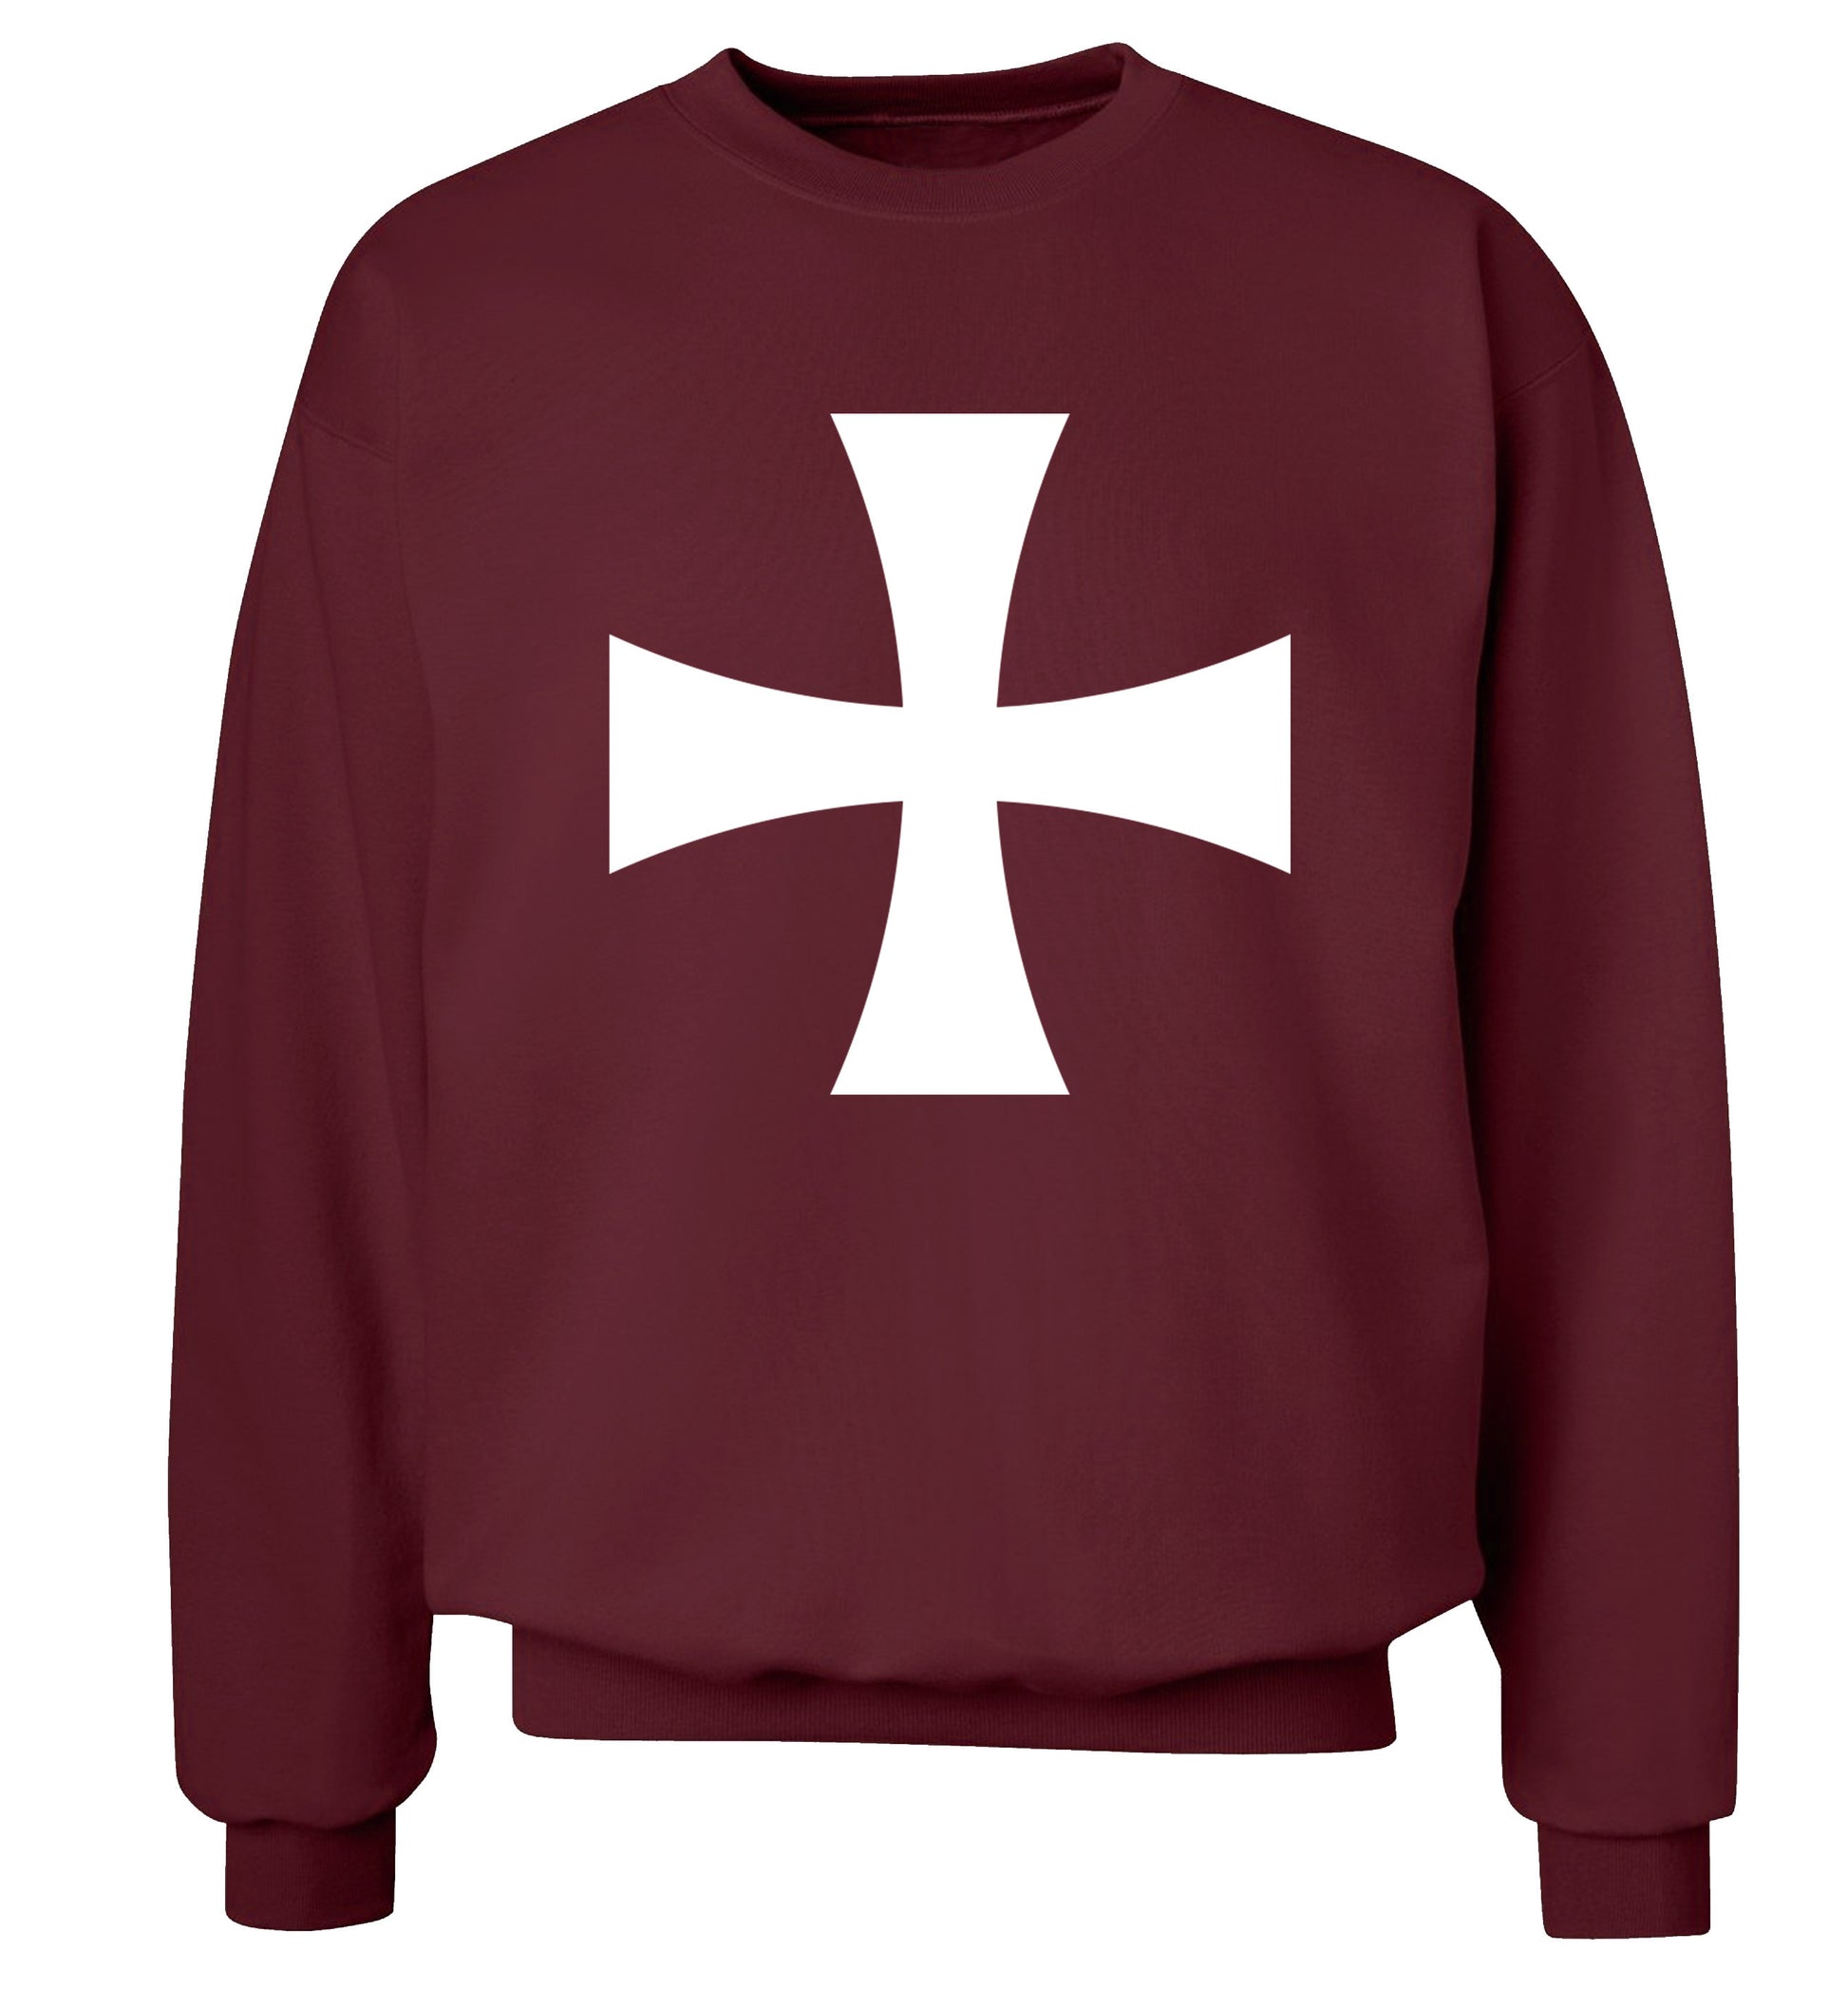 Knights Templar cross Adult's unisex maroon Sweater 2XL